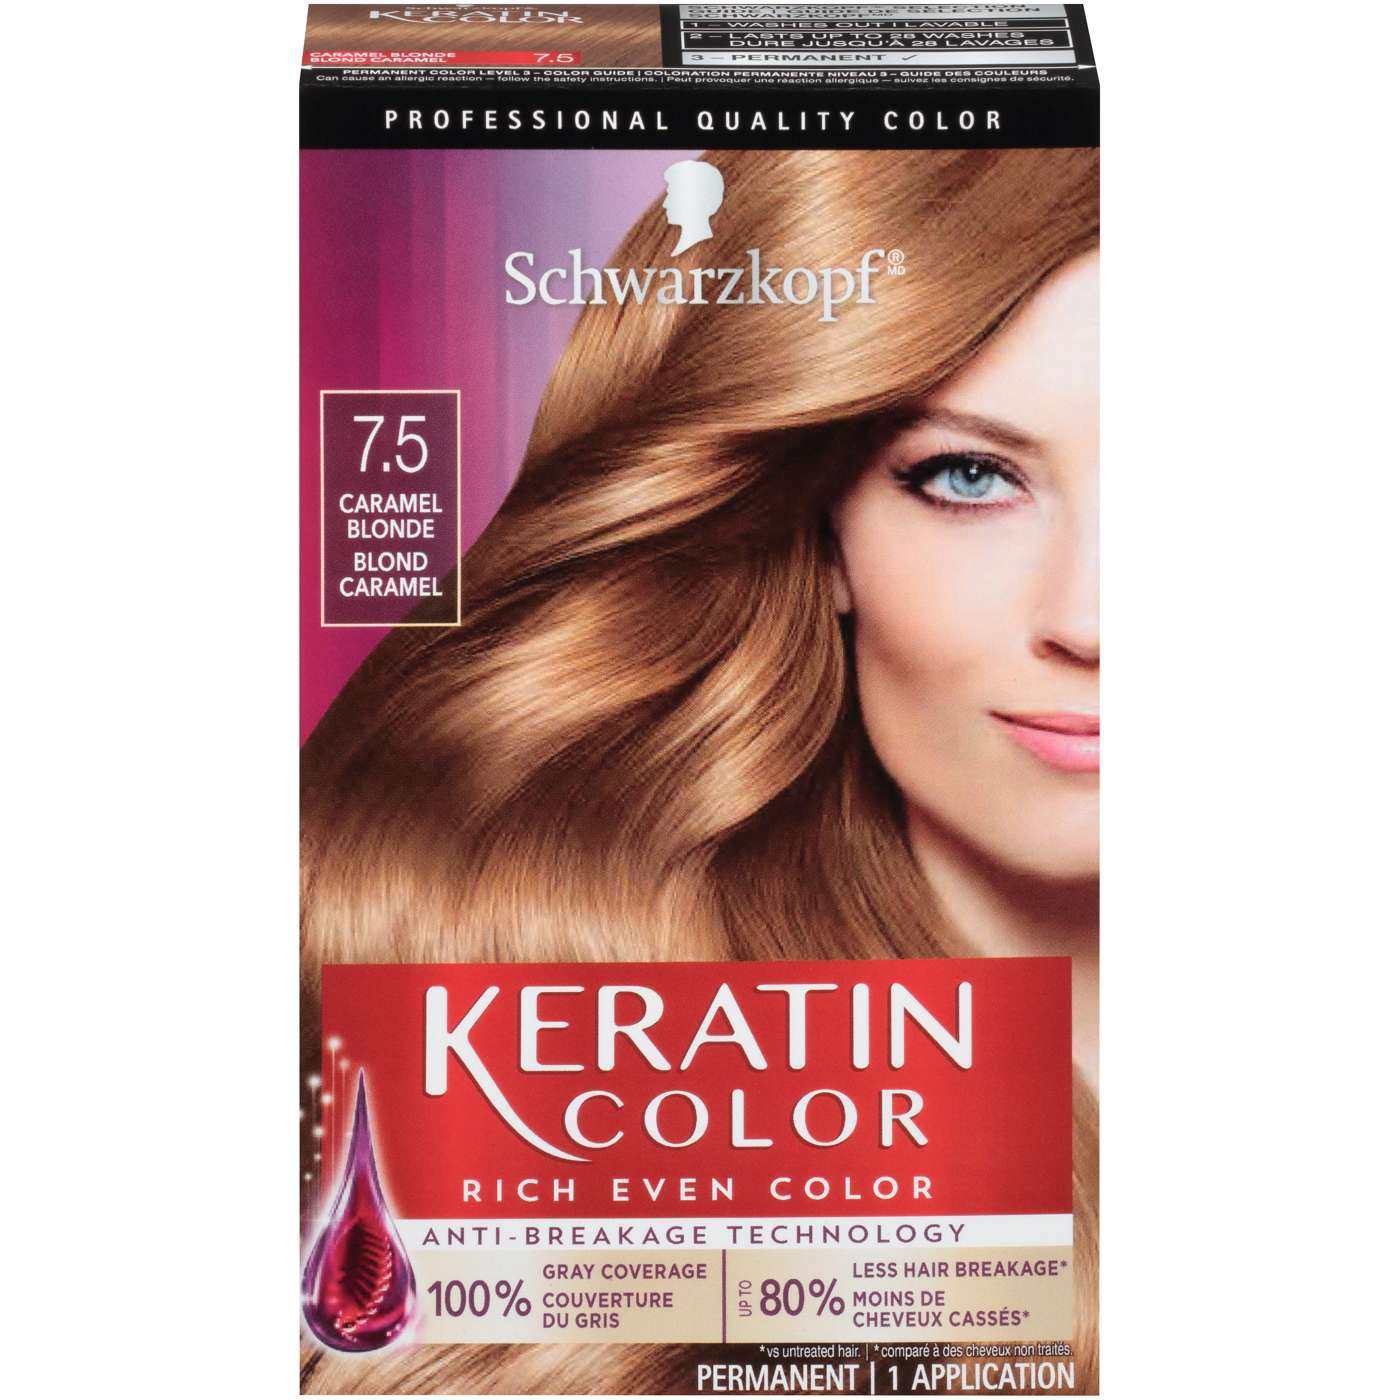 Schwarzkopf Keratin Color Permanent Hair Color Cream, 7.5 Caramel Blonde; image 1 of 5